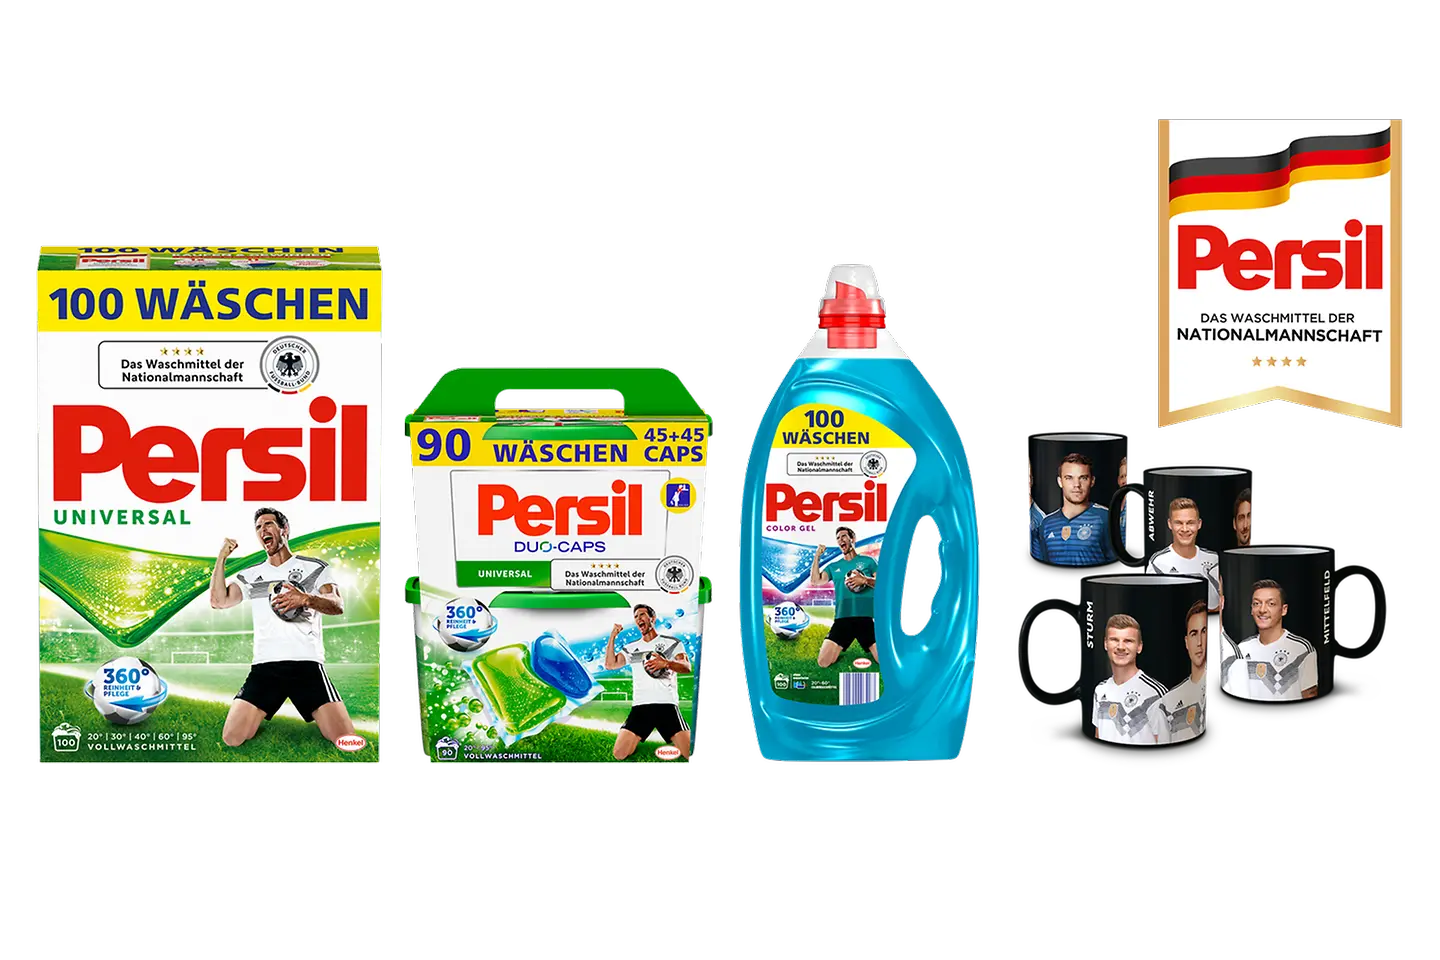 Persil – Das Waschmittel der Nationalmannschaft